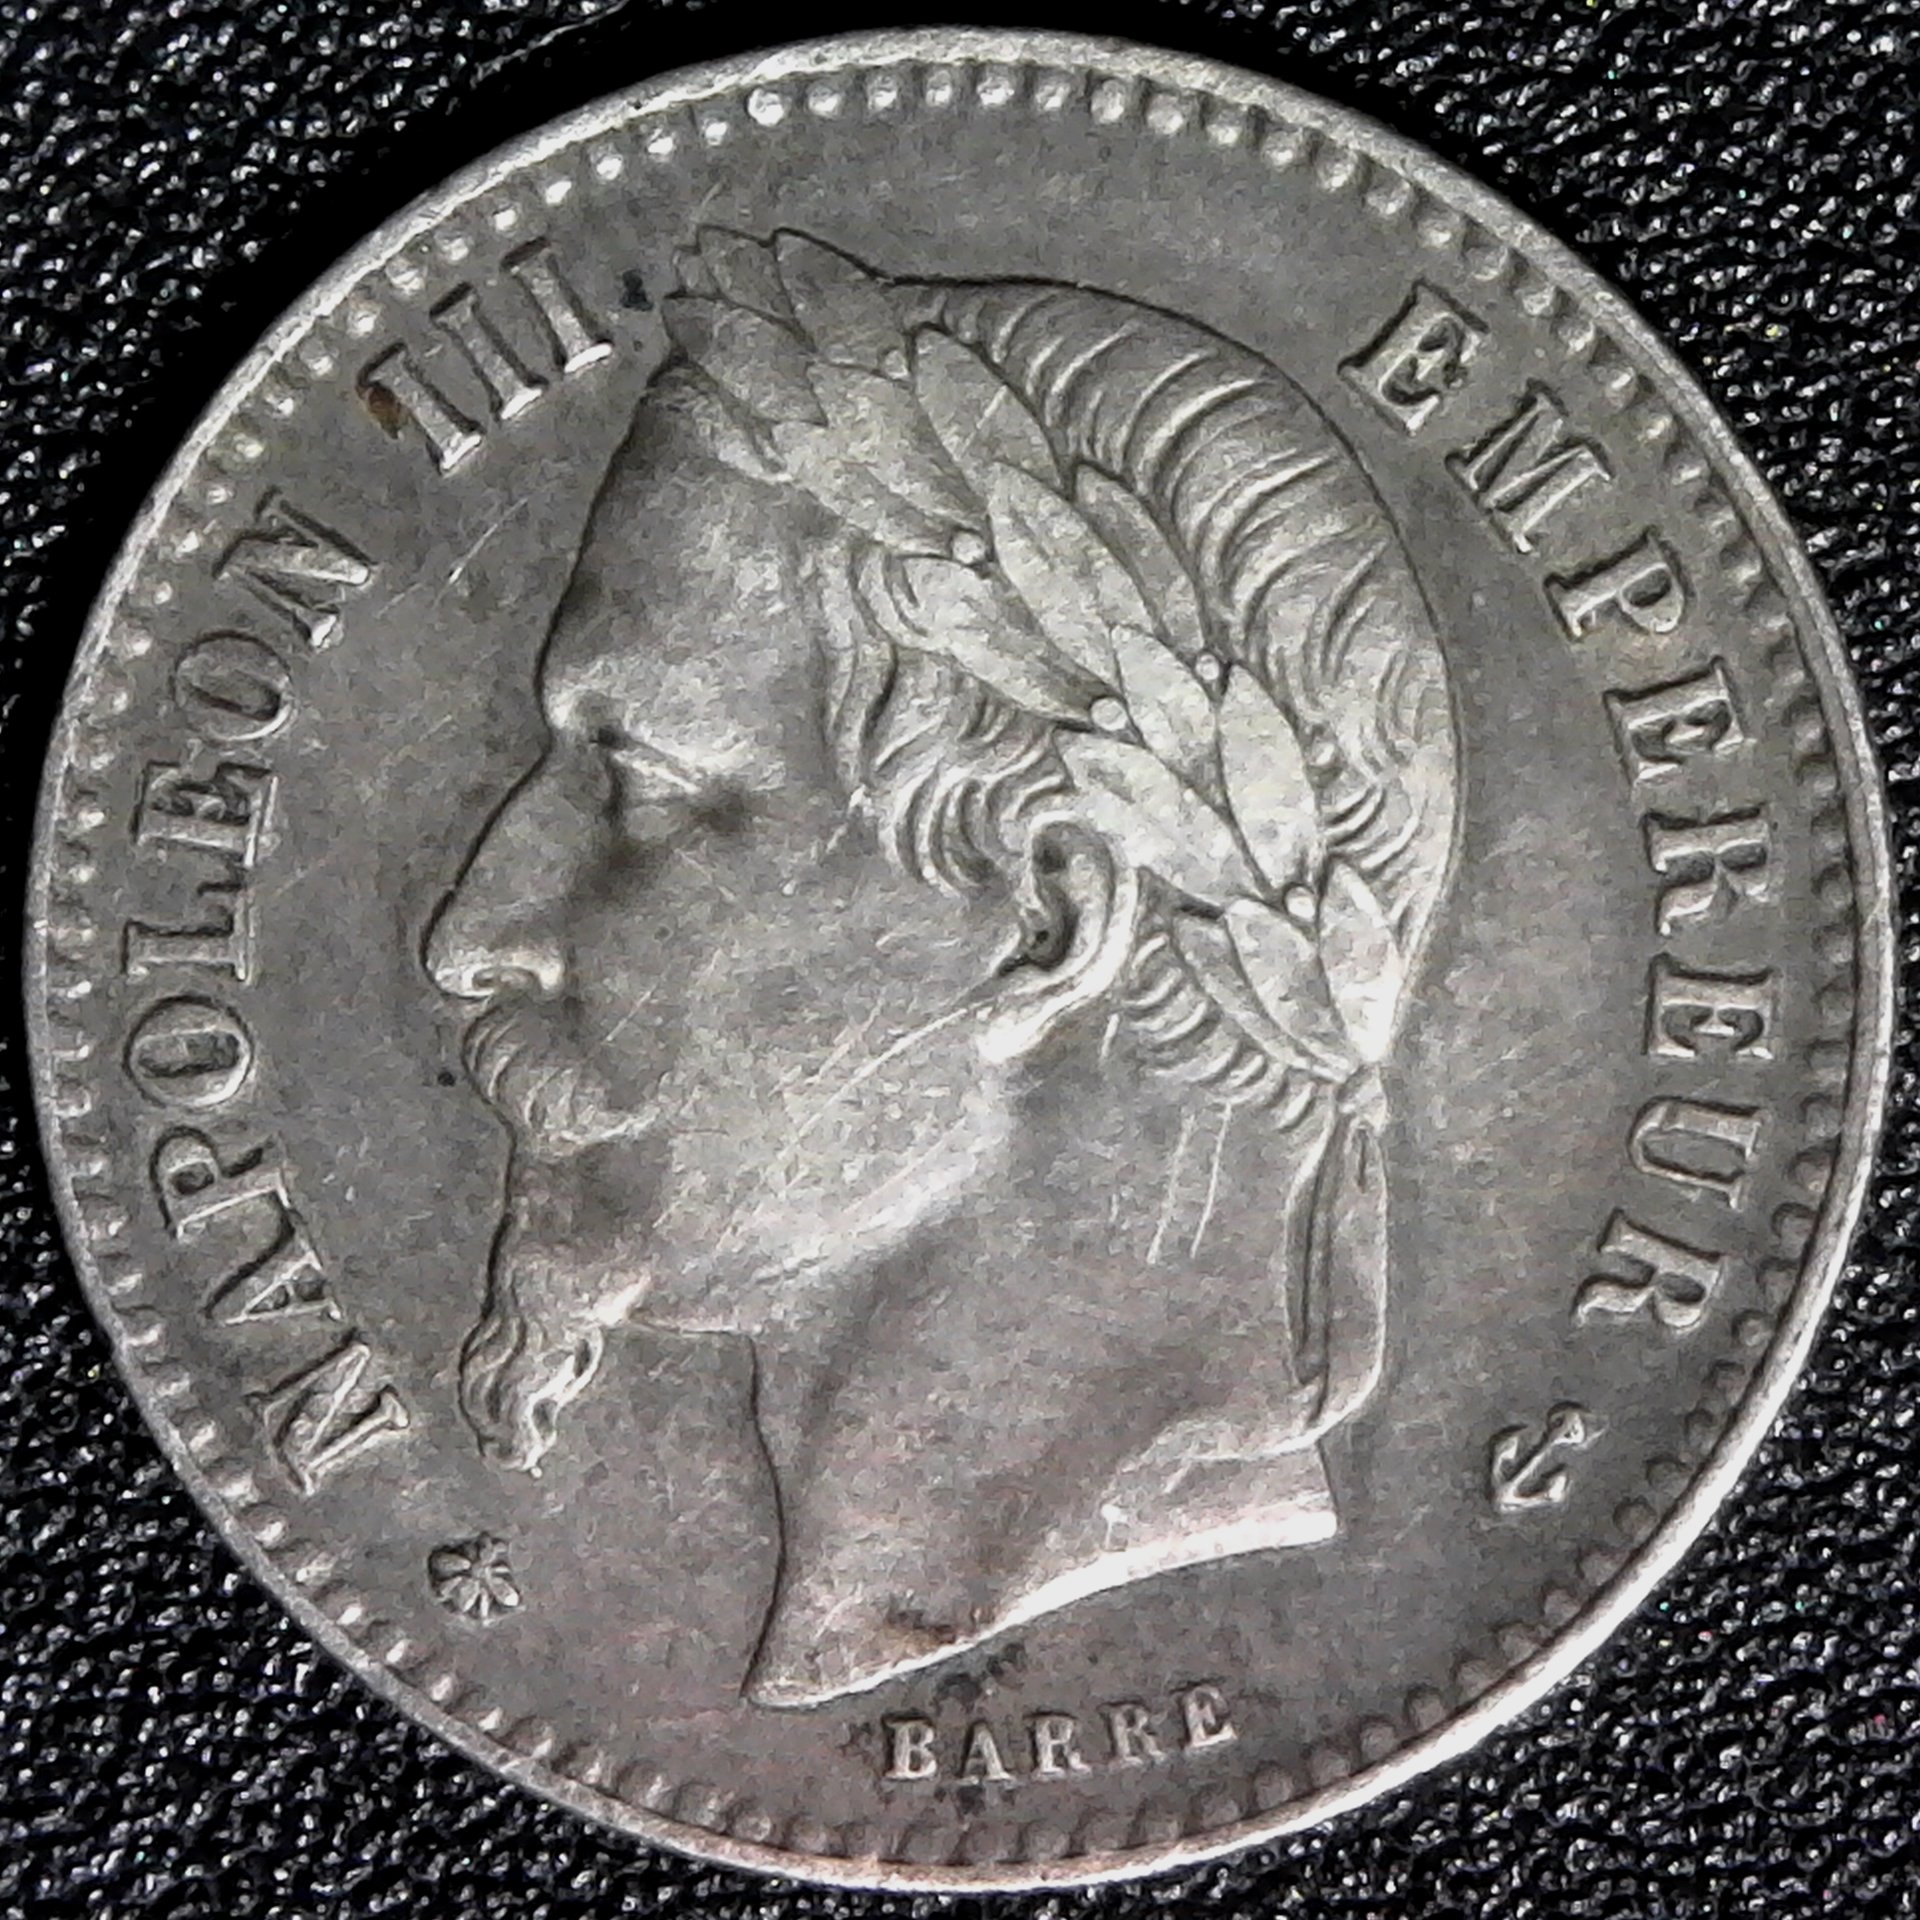 France 50 centimes 1866A rev.jpg